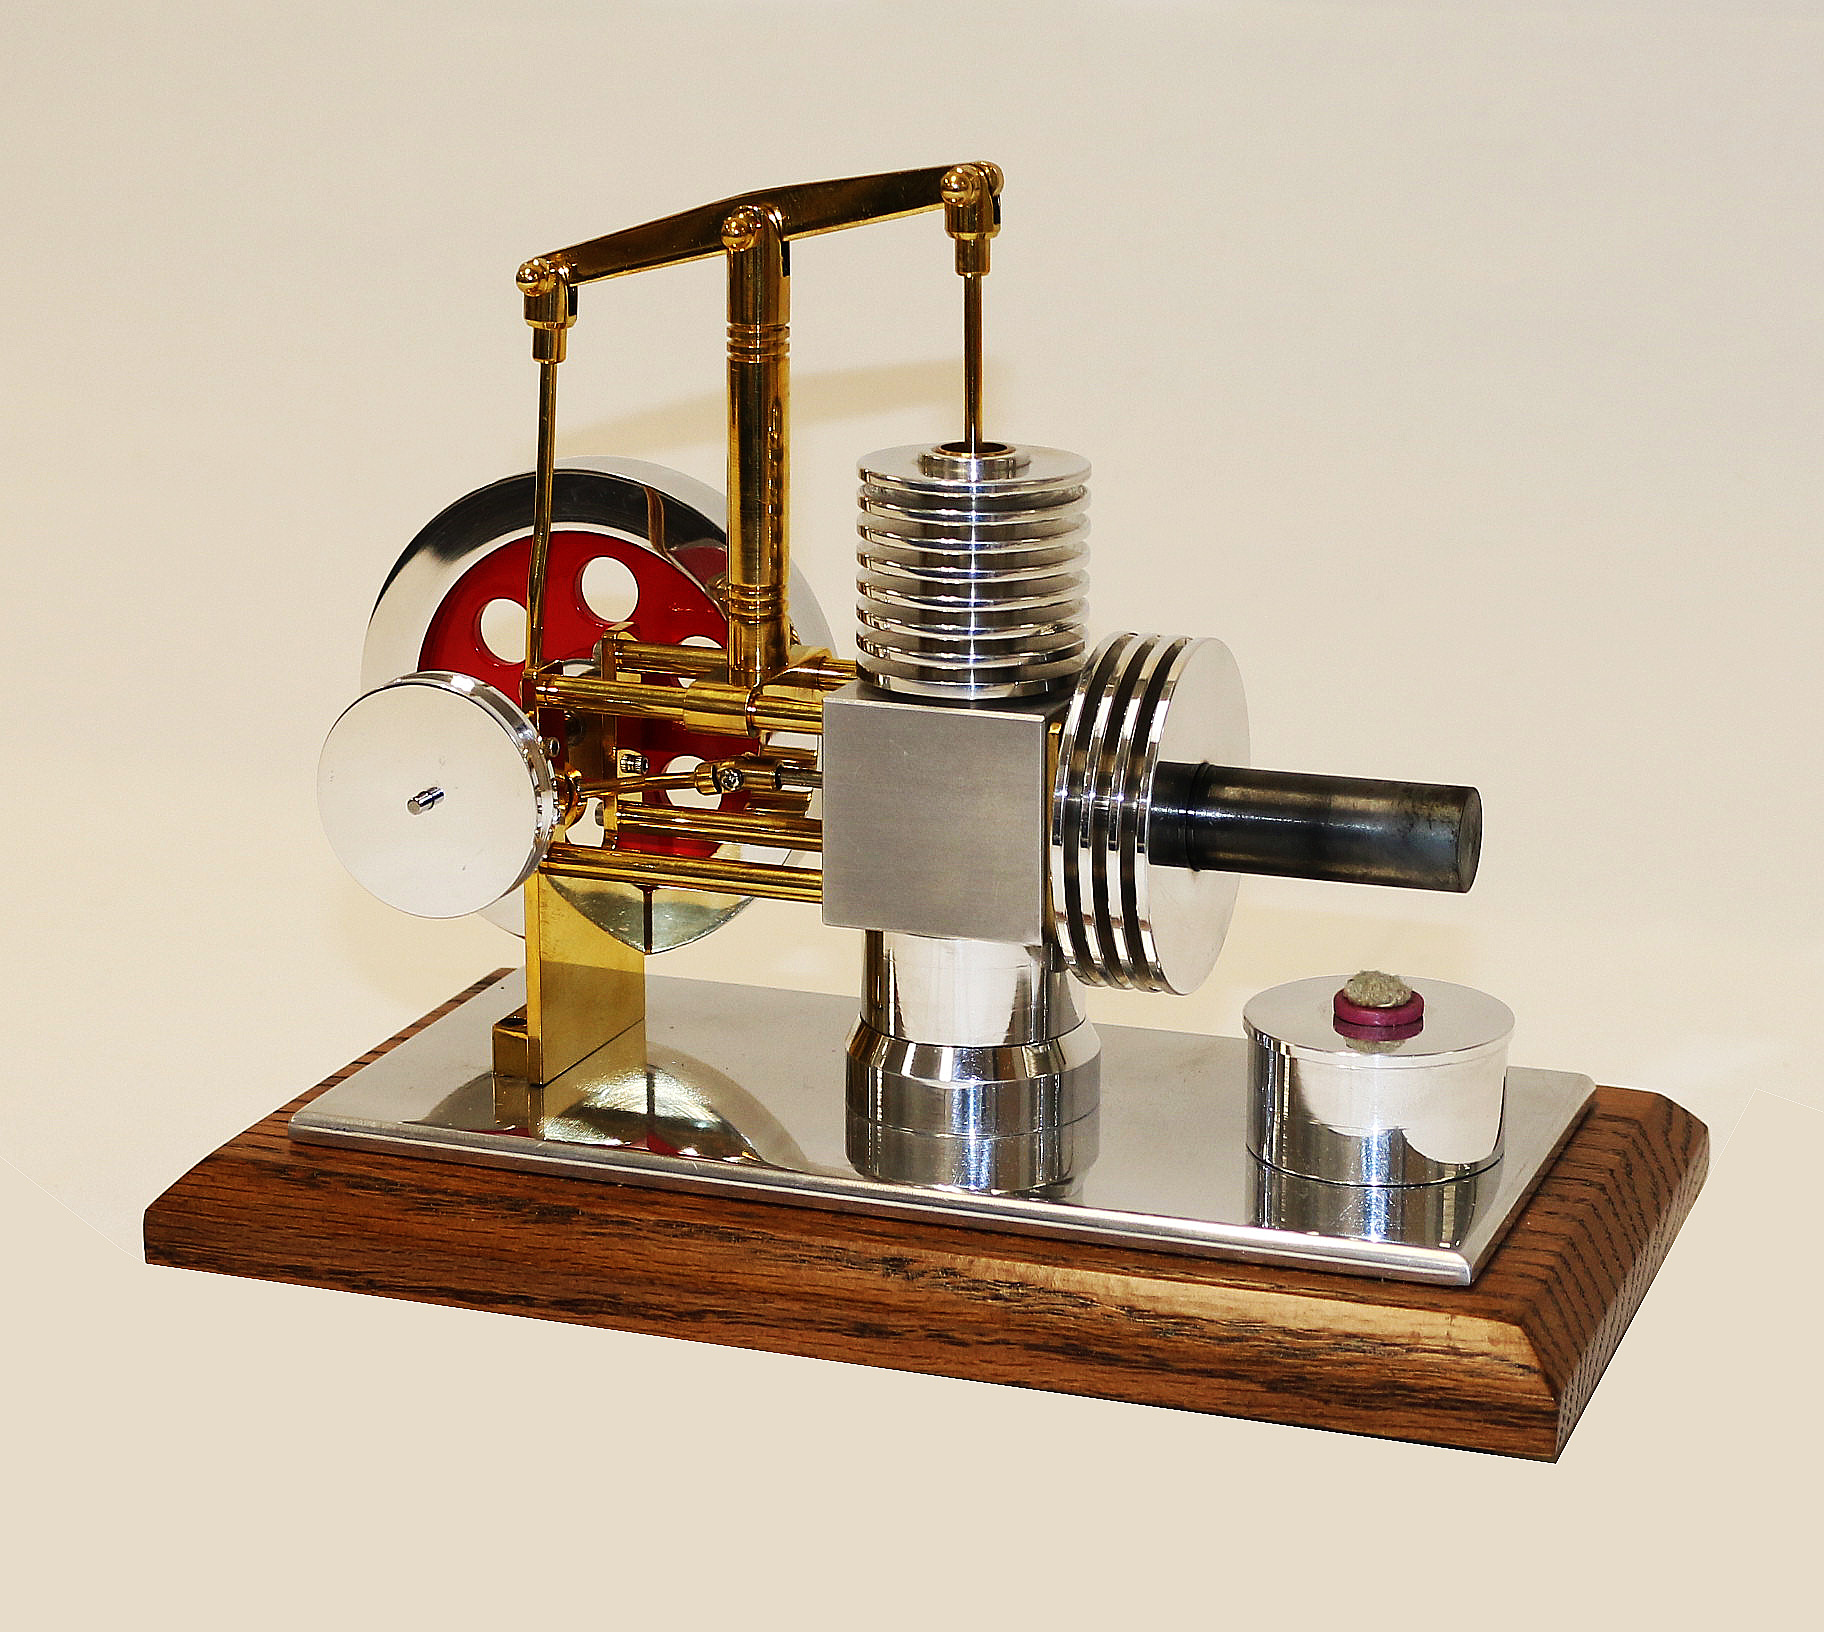 Schindele Walking Beam Stirling Engine 